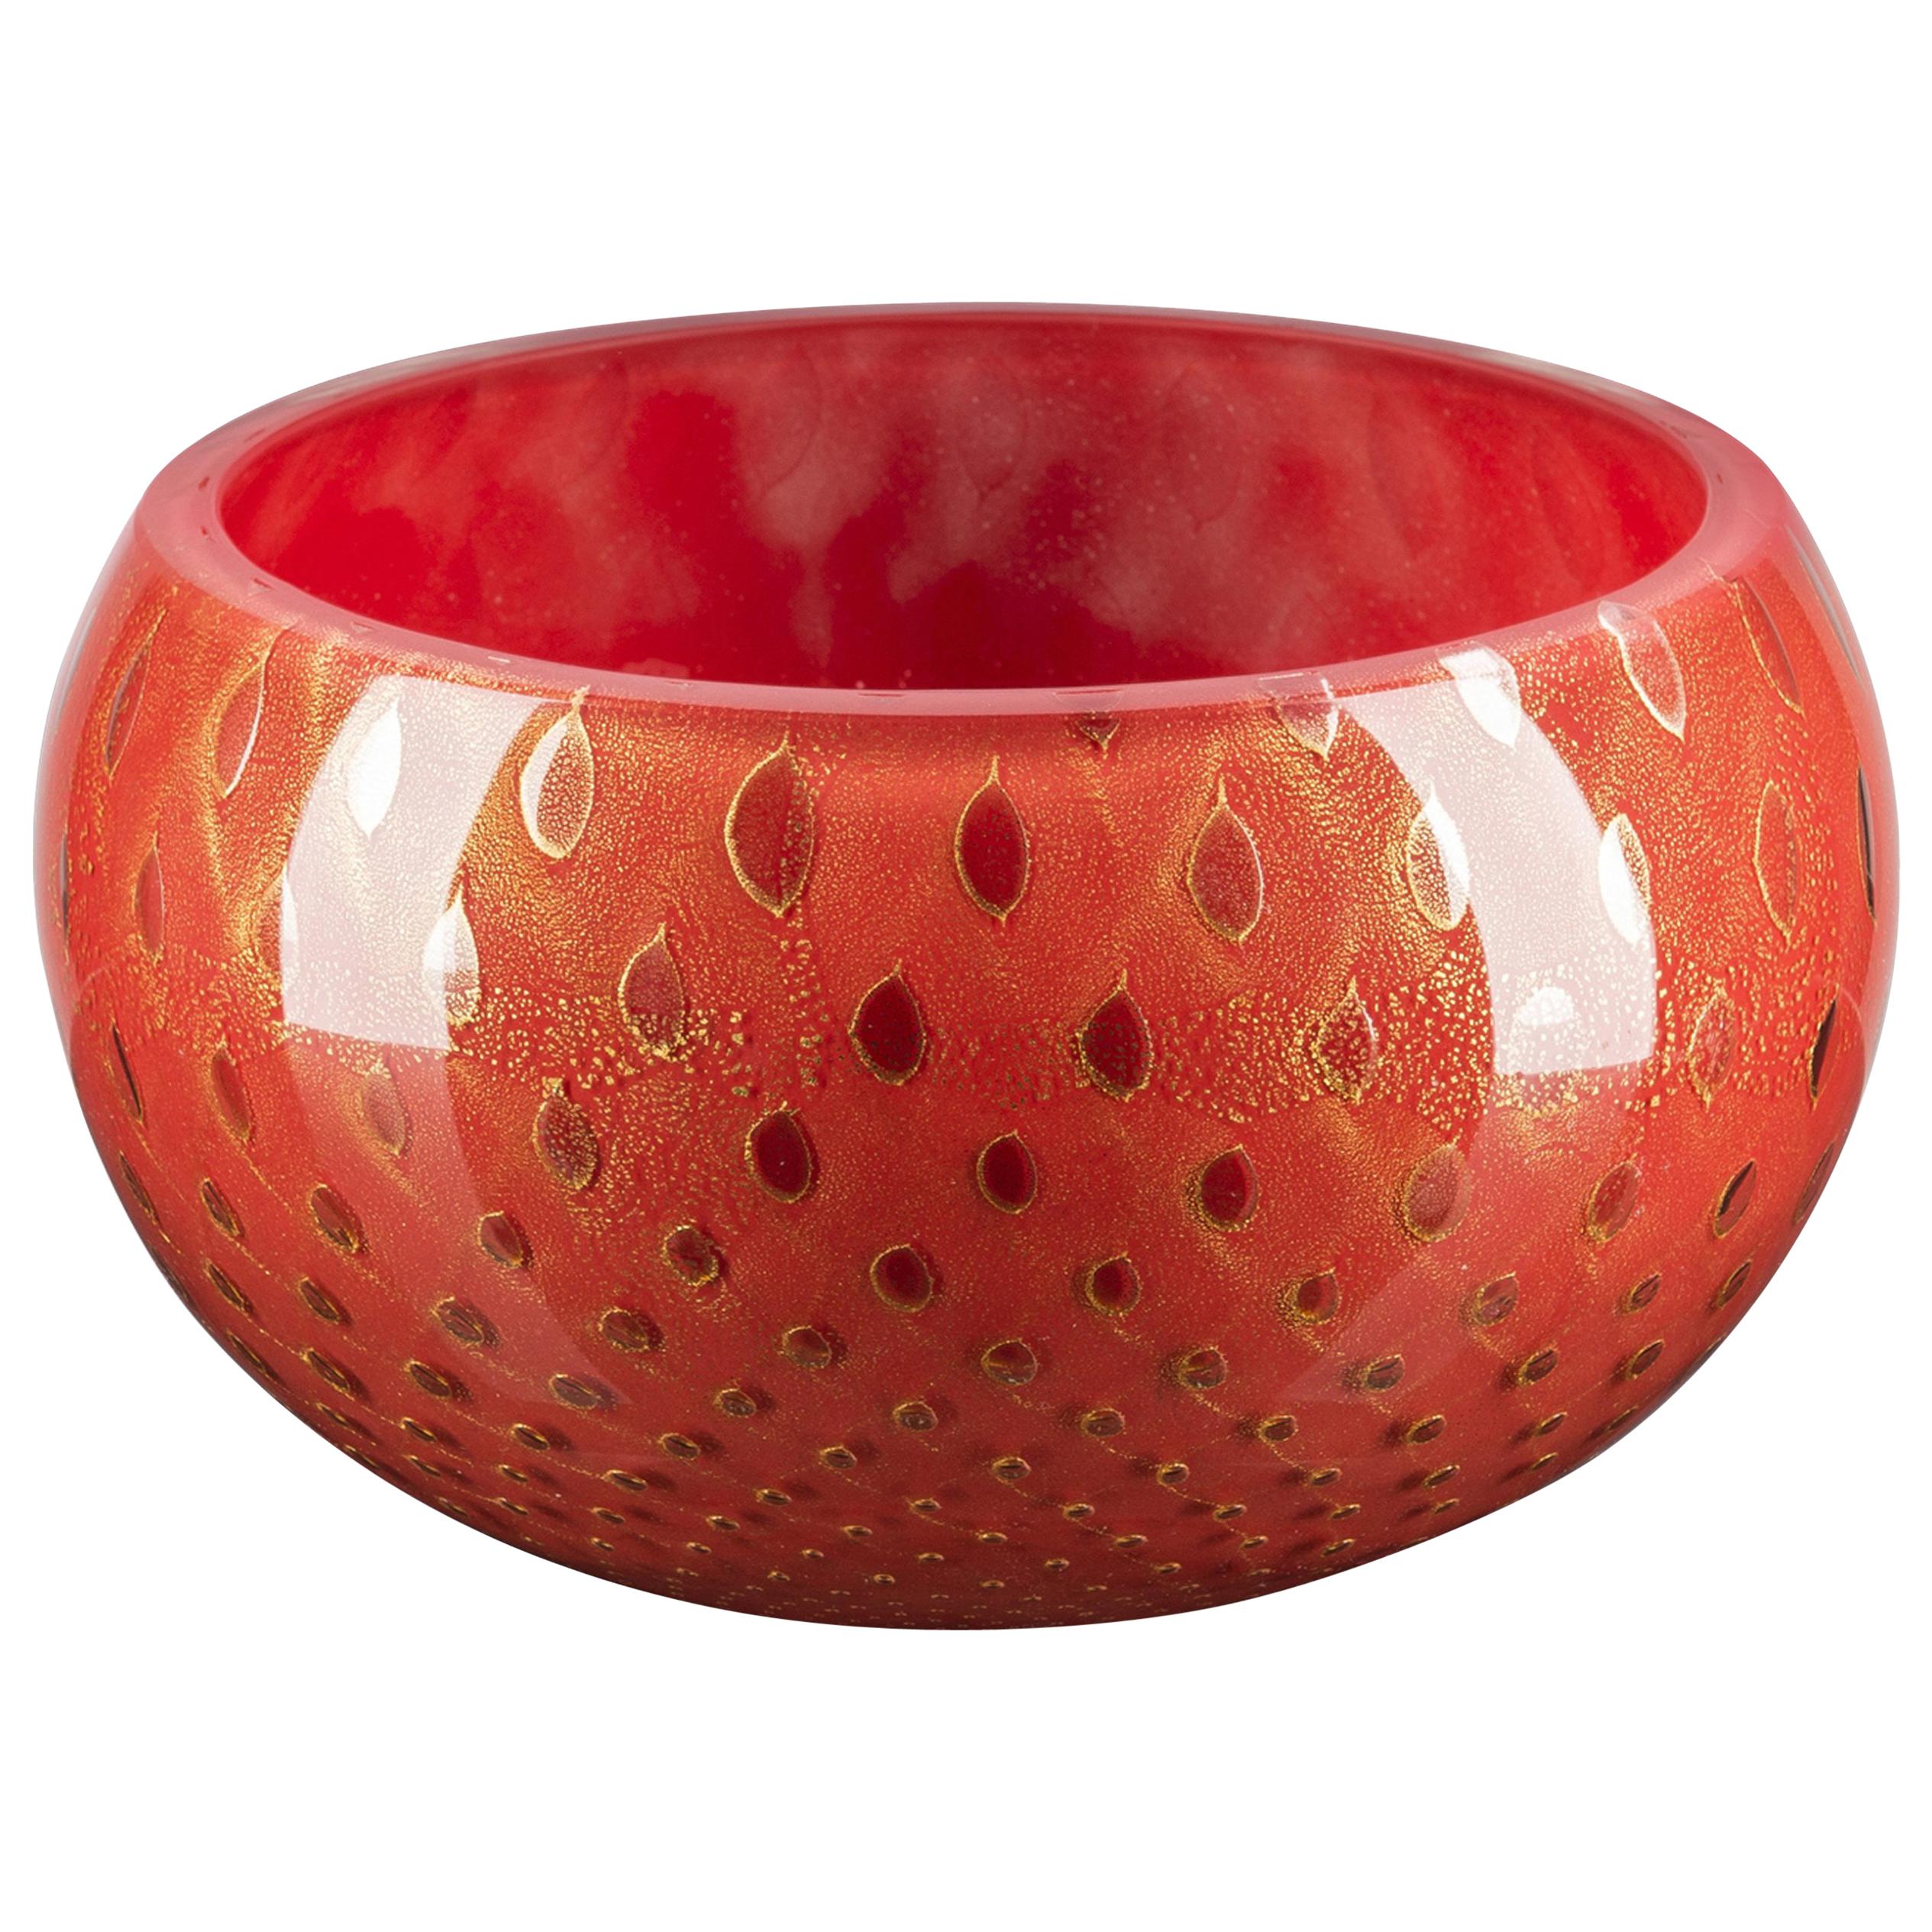 Bowl Mocenigo, Muranese Glass, Gold 24-Karat and Red, Italy